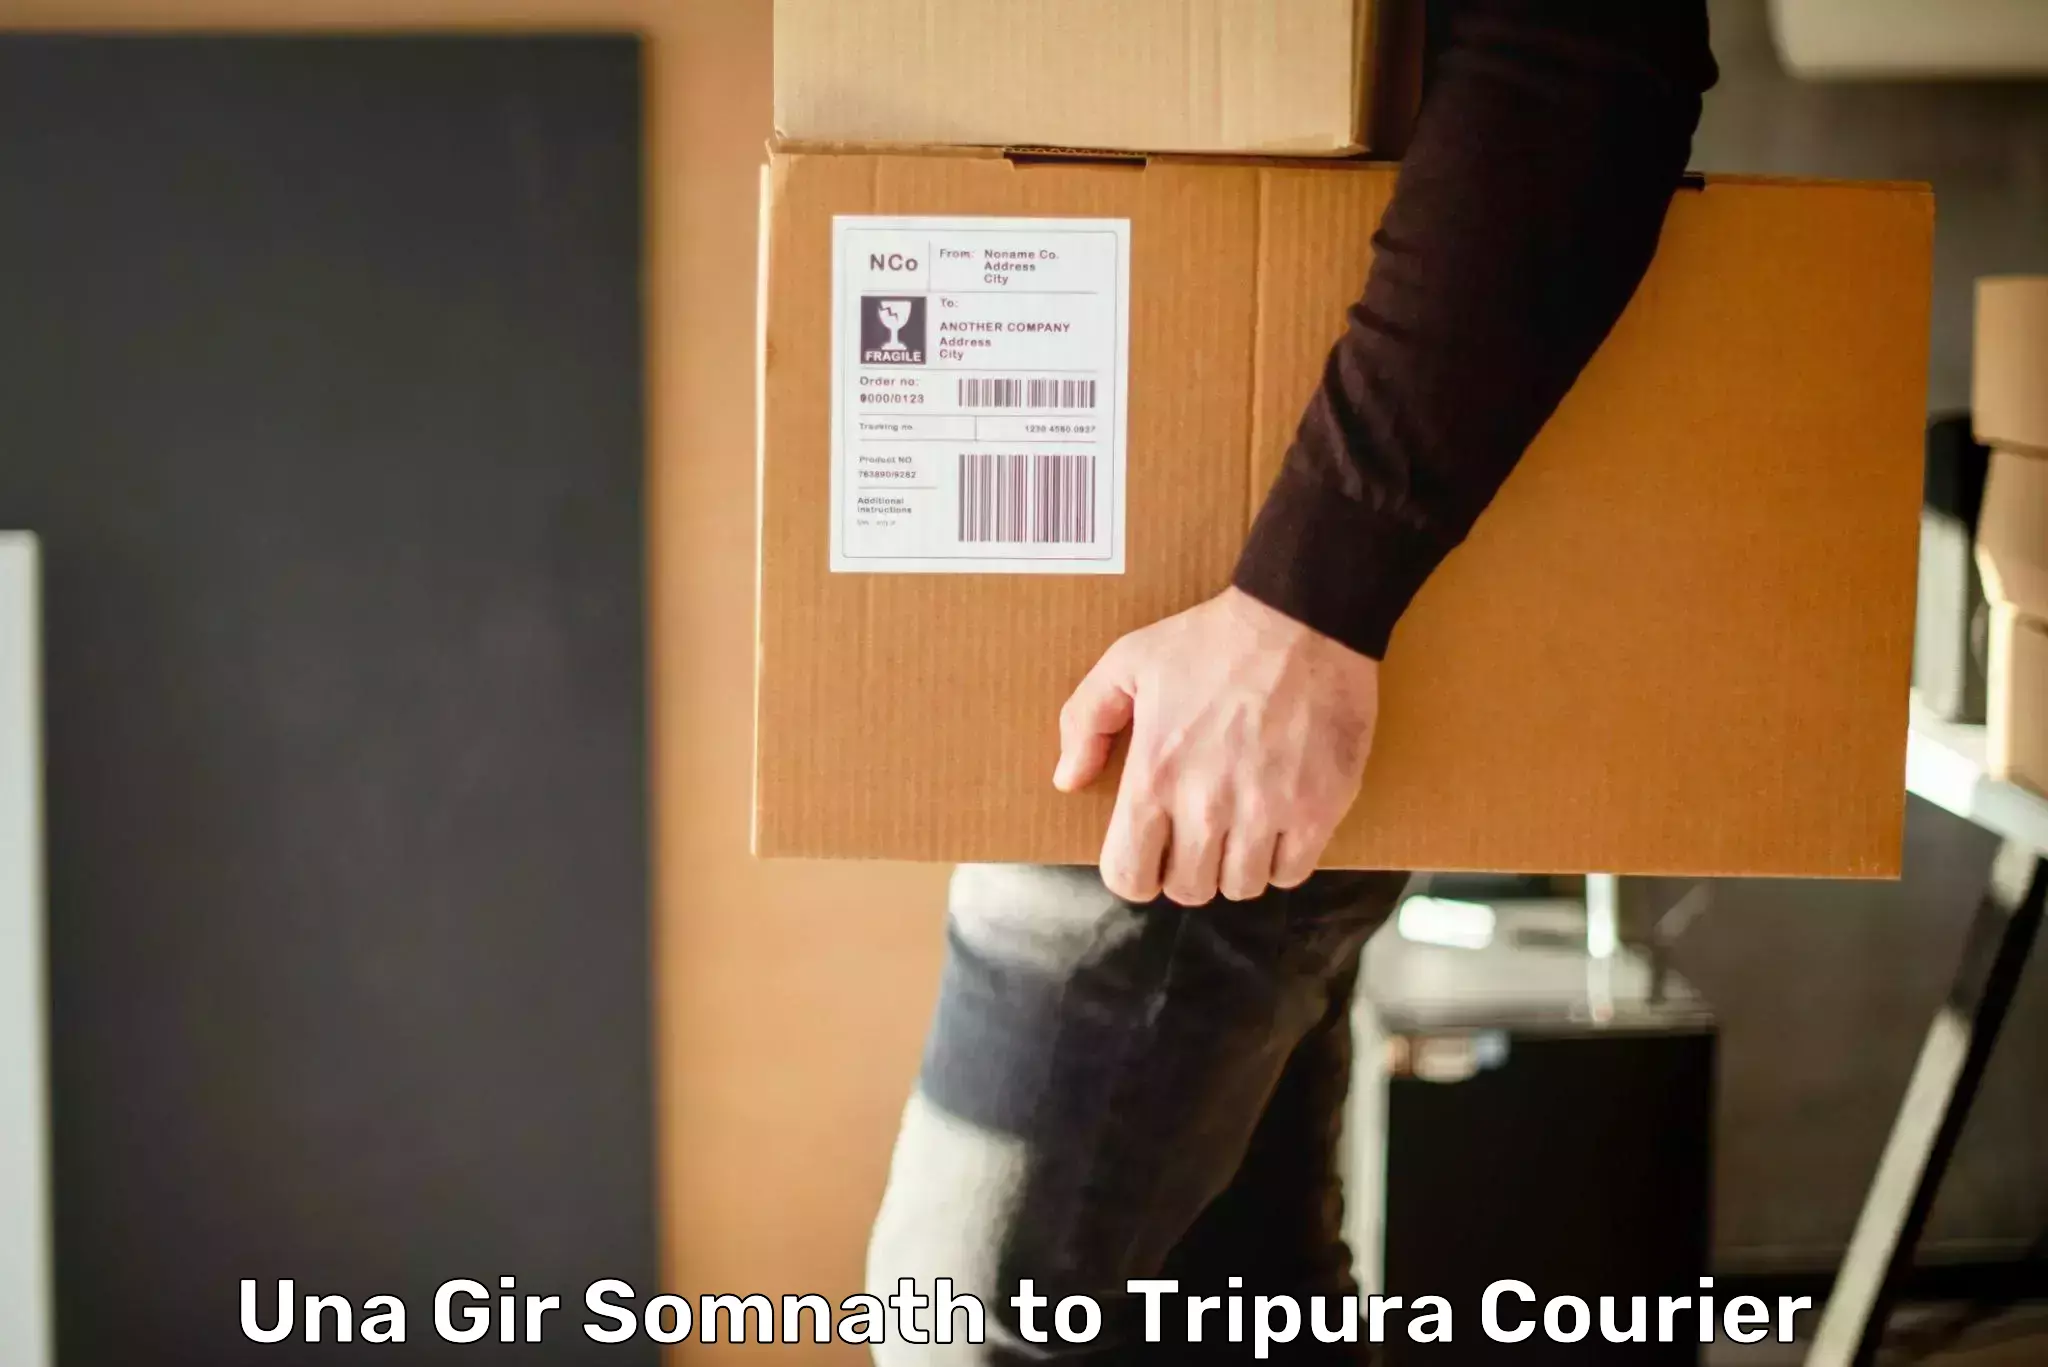 Special handling courier Una Gir Somnath to Udaipur Tripura